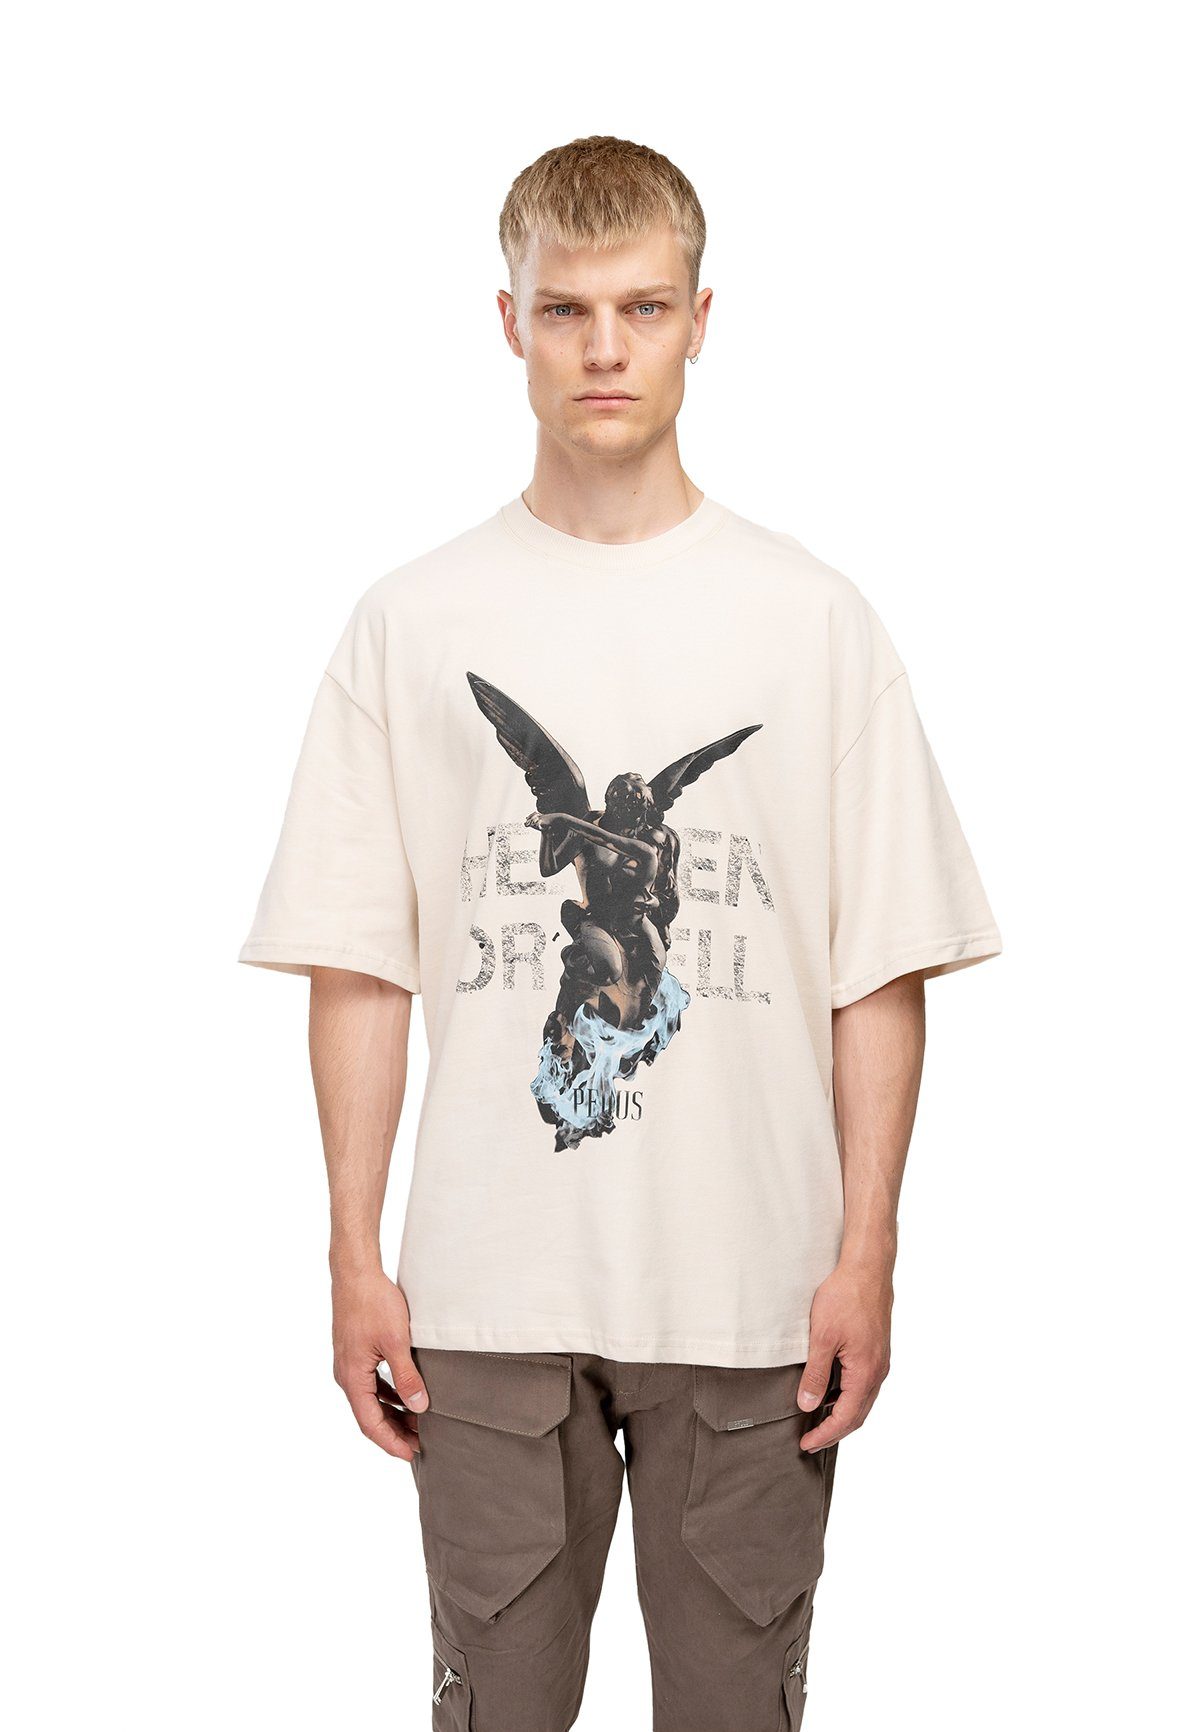 PEQUS T-Shirt Heaven or Hell